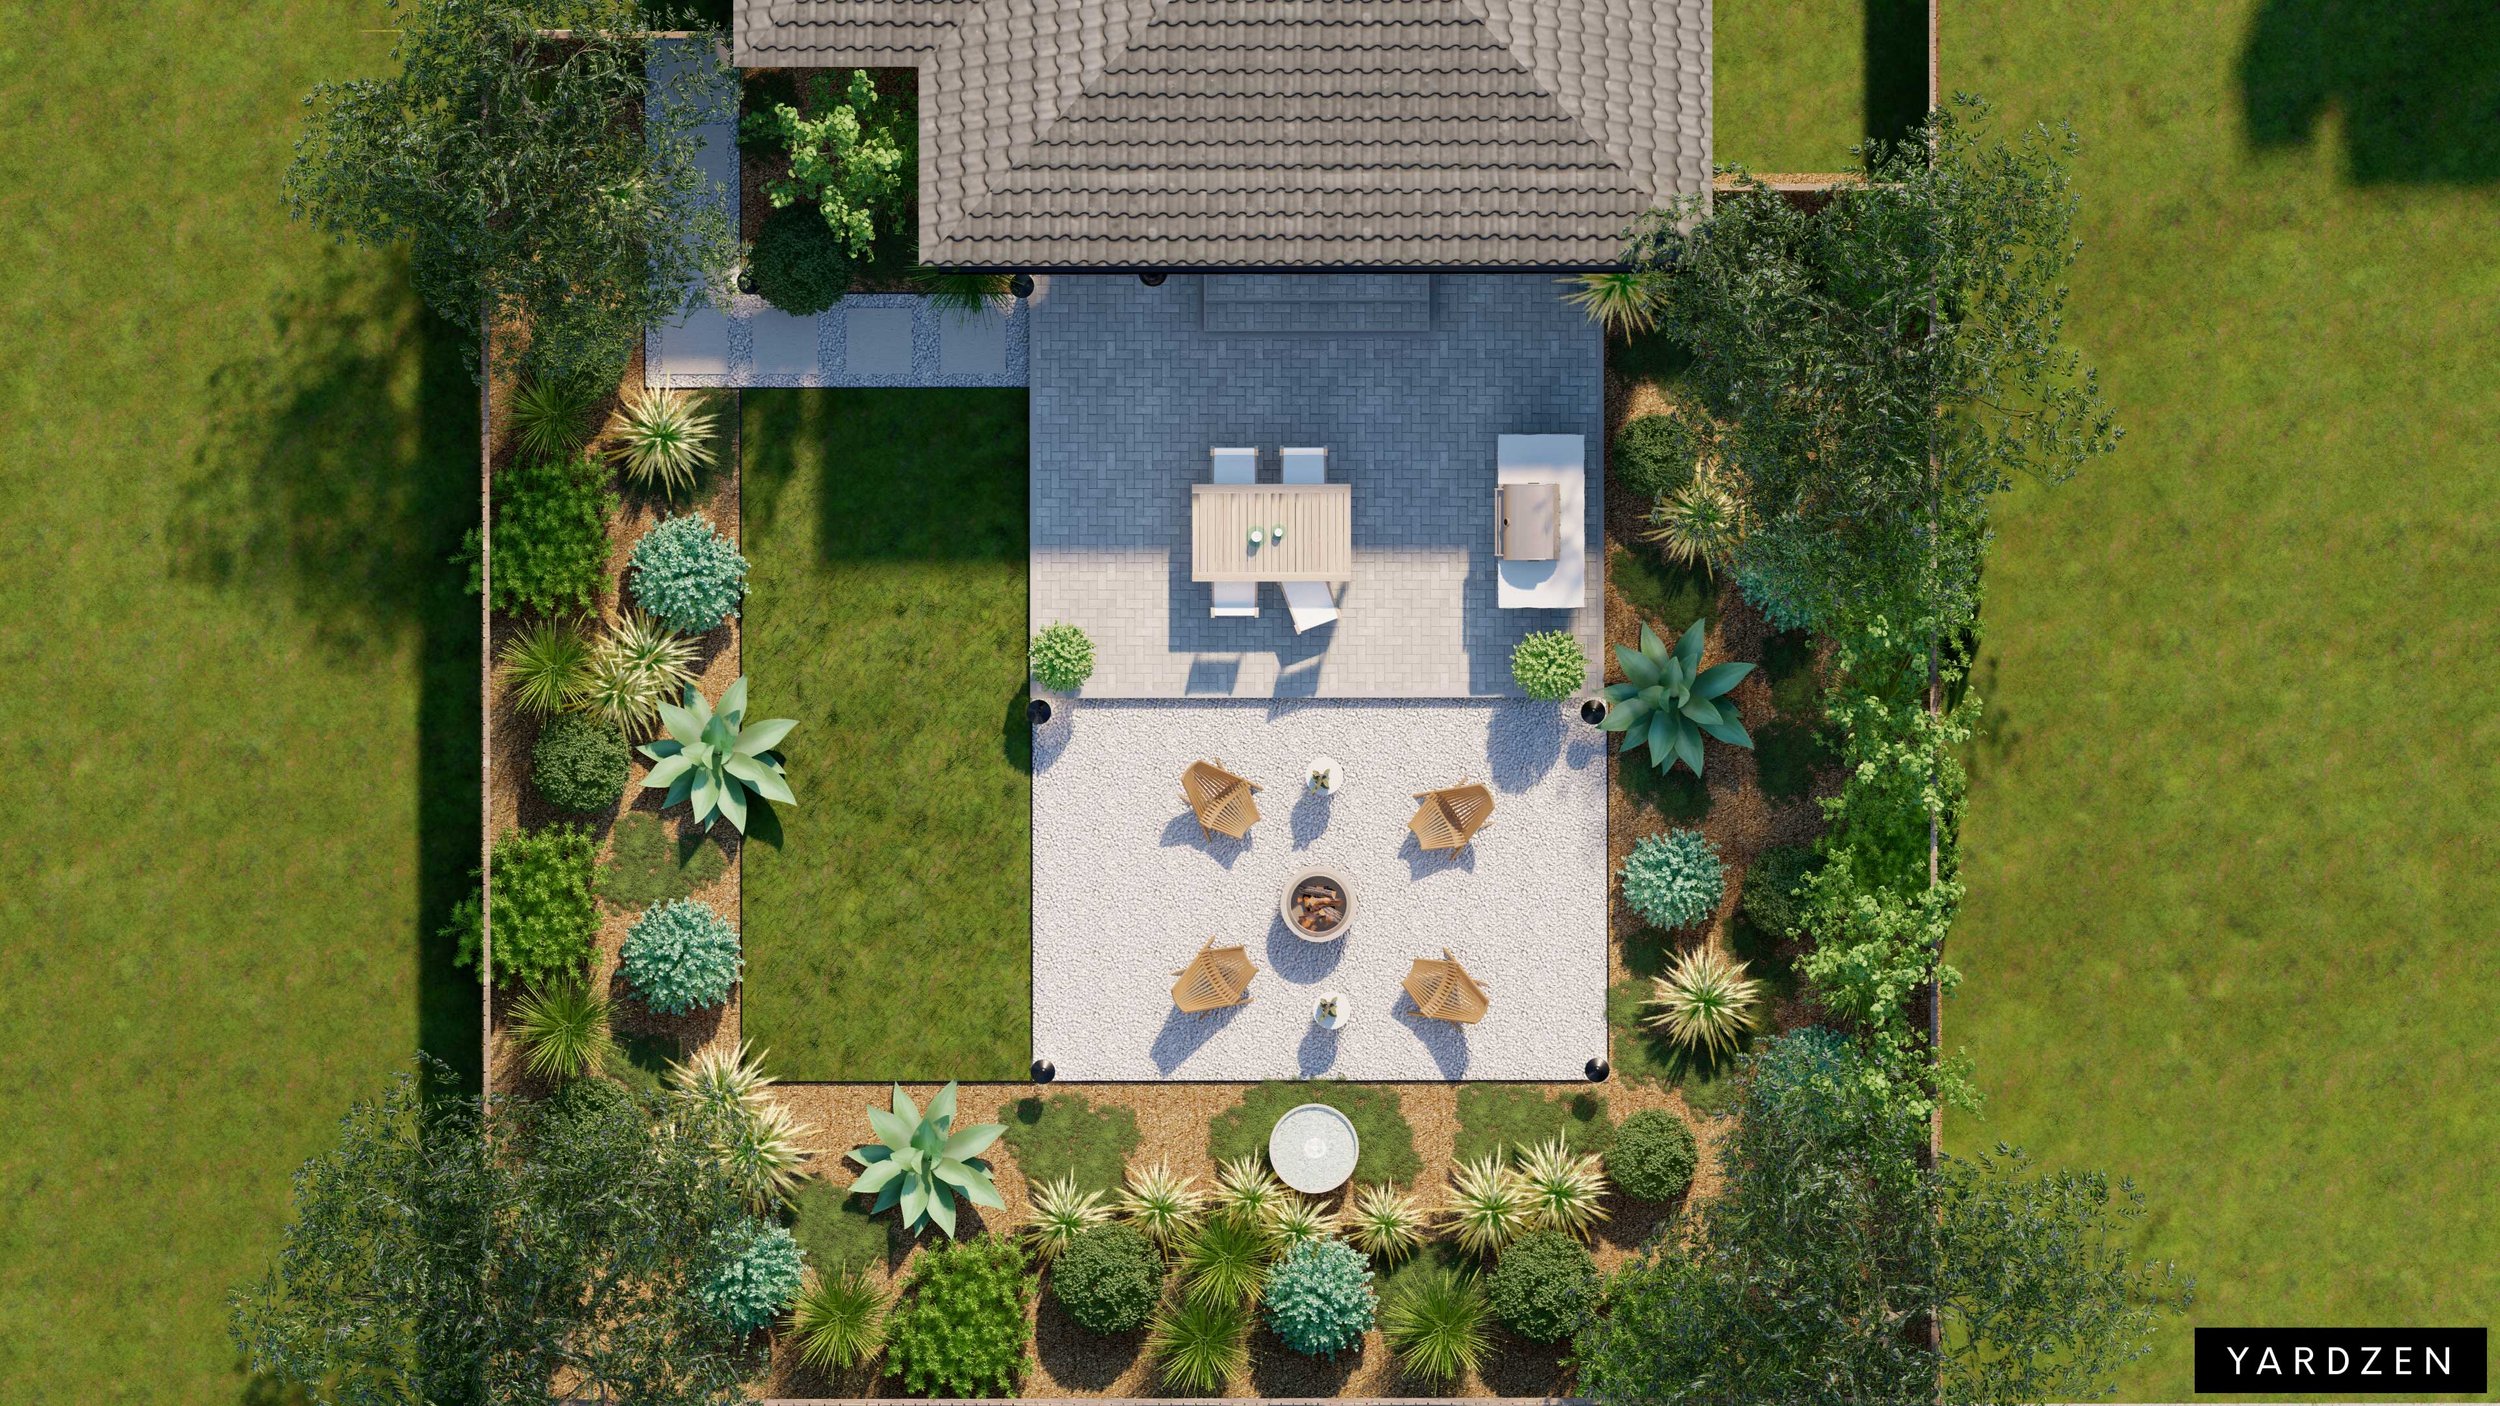 Client’s backyard top view for $50,000 Yardzen transformation